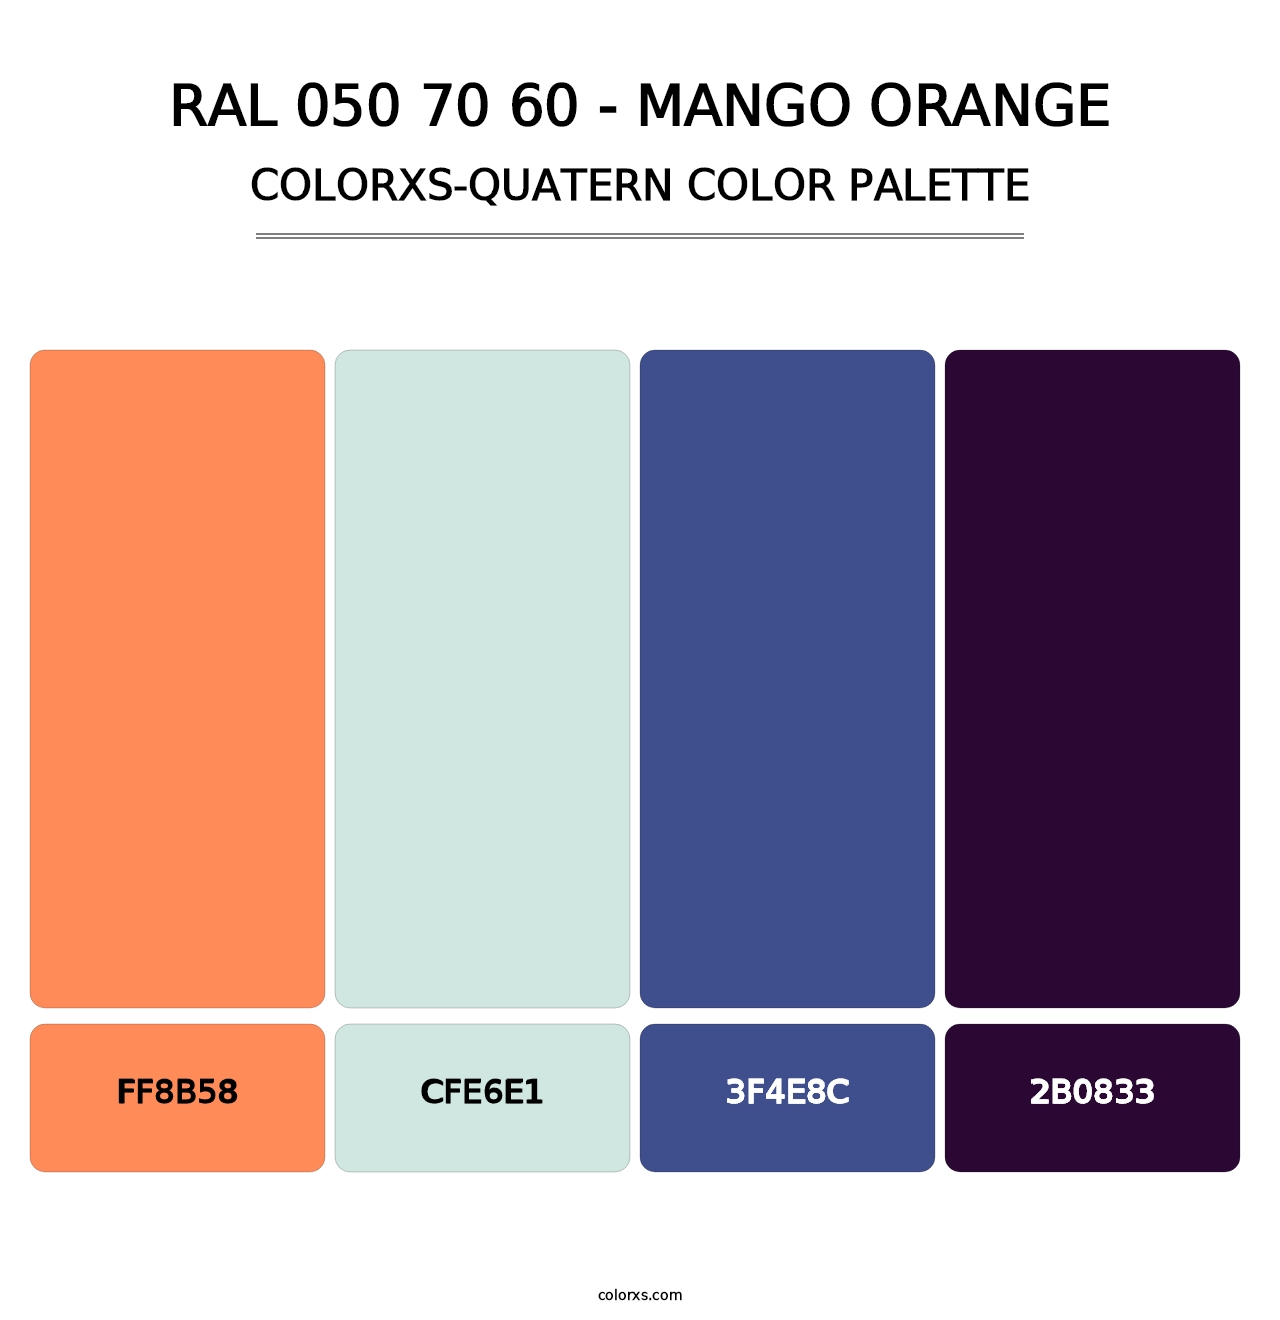 RAL 050 70 60 - Mango Orange - Colorxs Quatern Palette